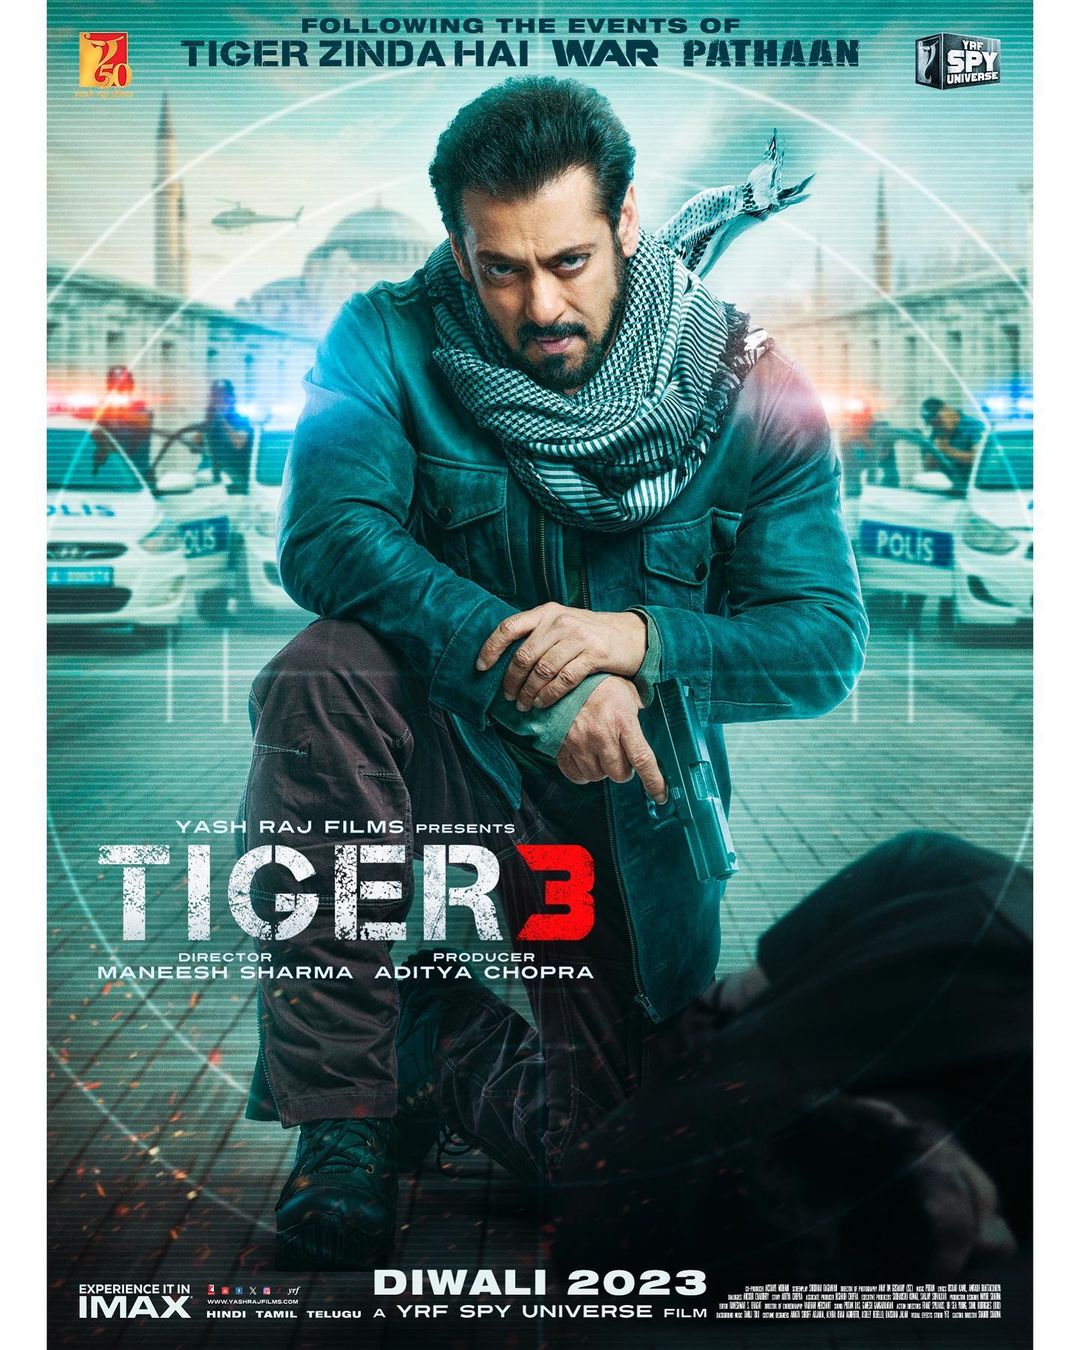 Salman Khan in Tiger 3 poster